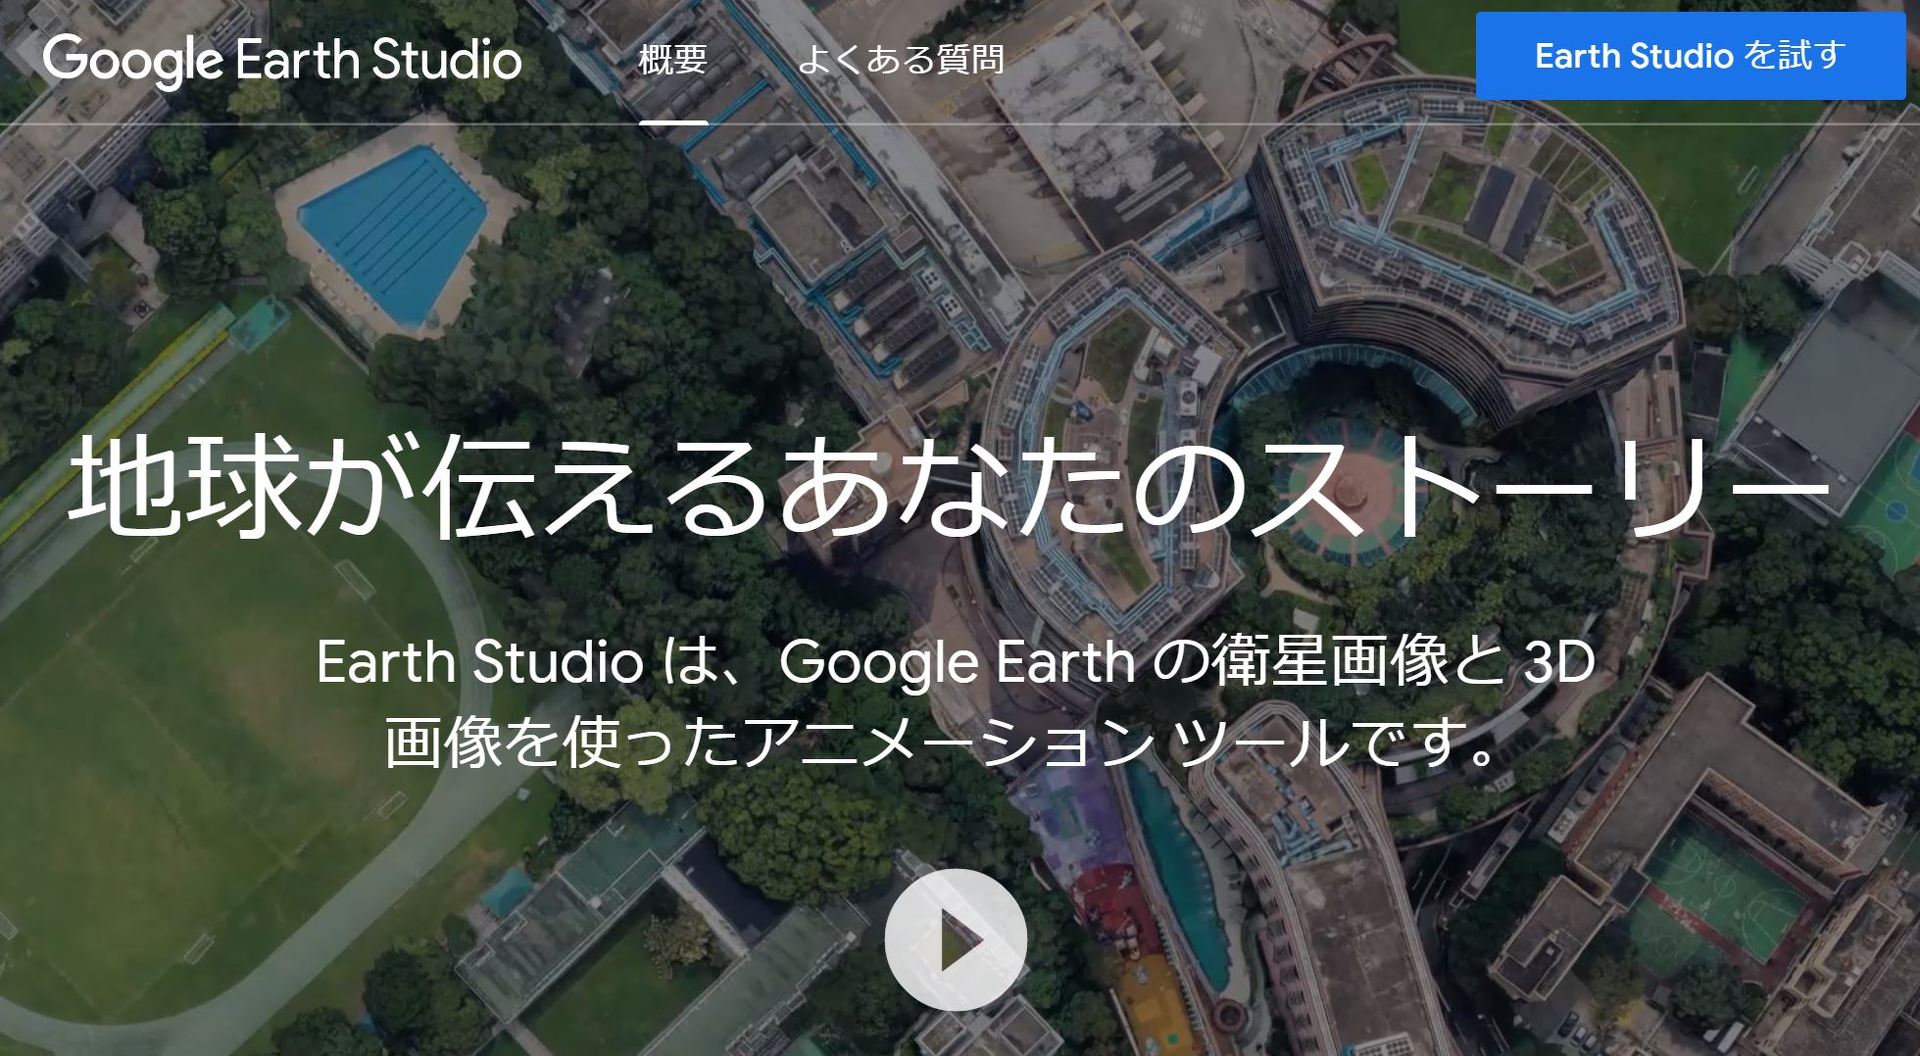  uGoogle Earth Studiov